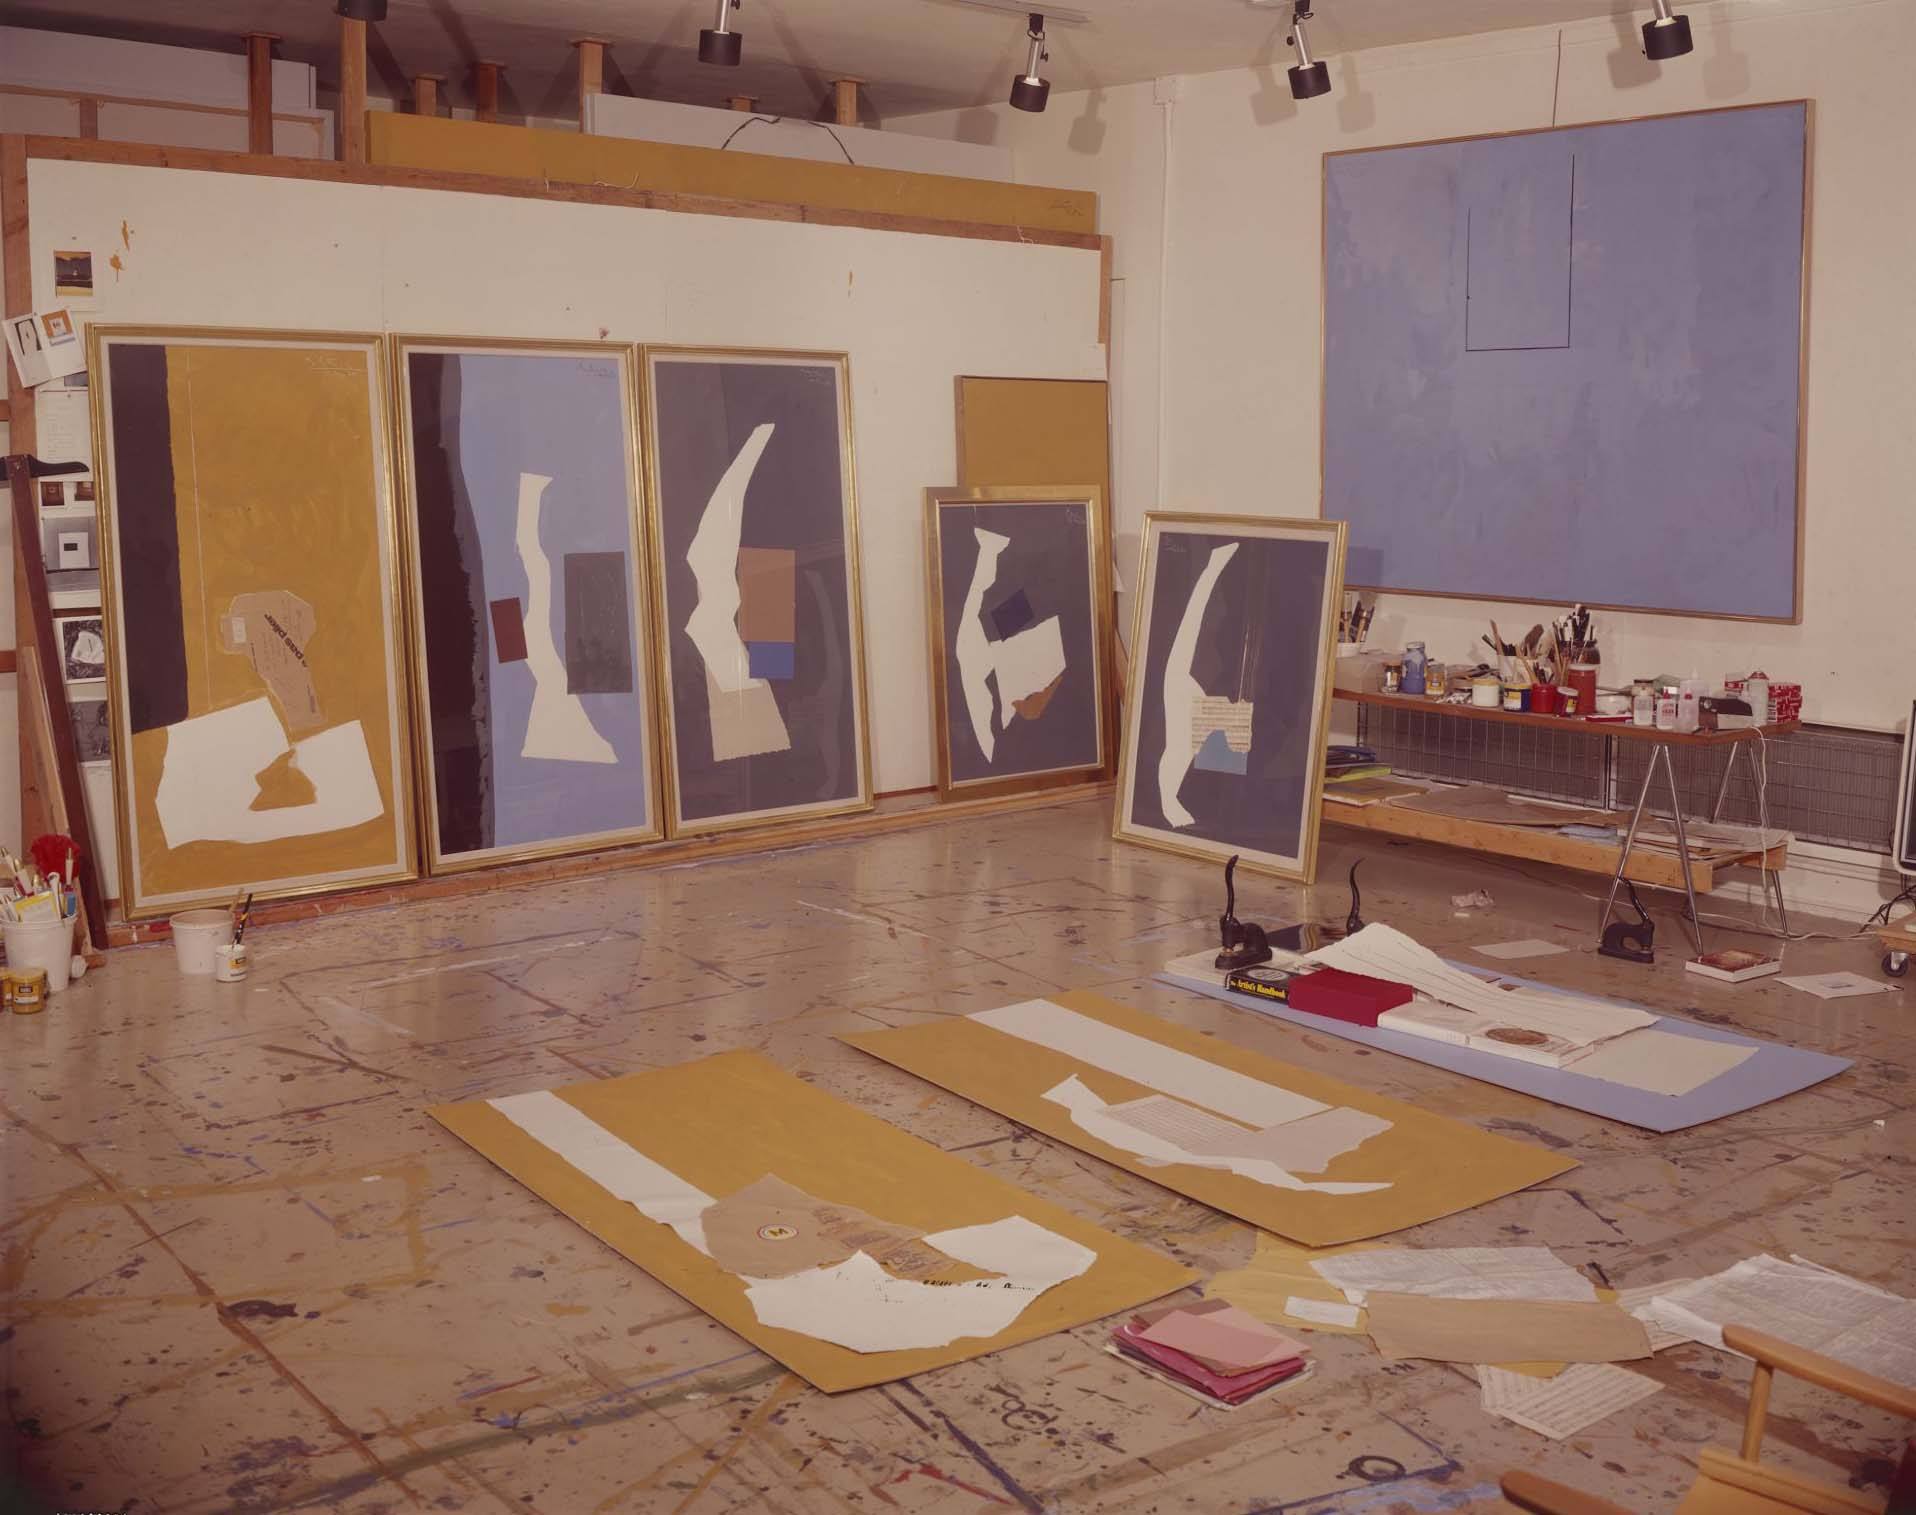 Motherwell’s Greenwich collage studio, June 1974